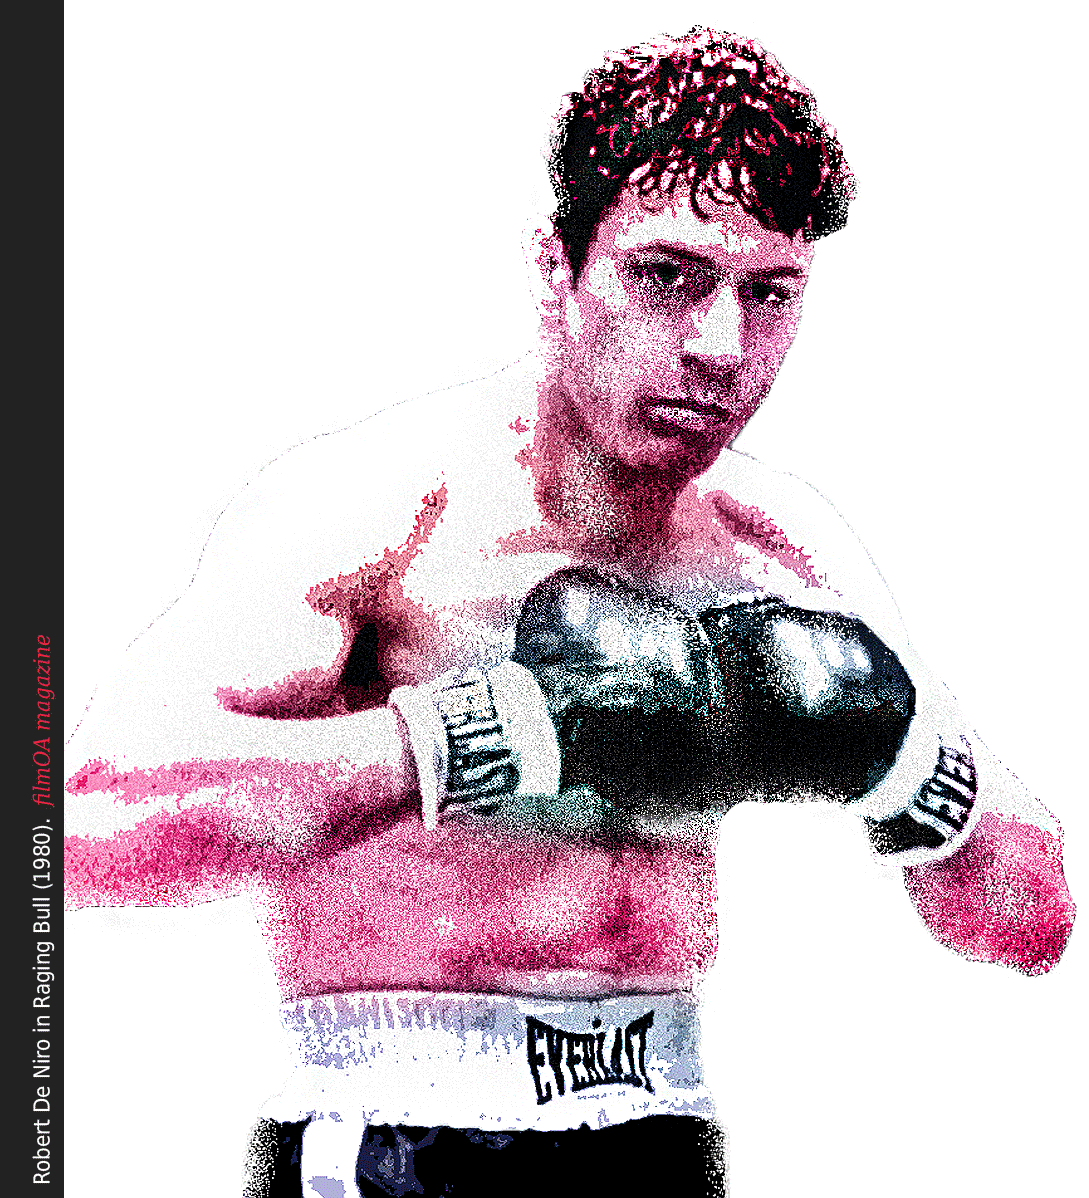 Robert De Niro Raging Bull poster art boxing Everlast